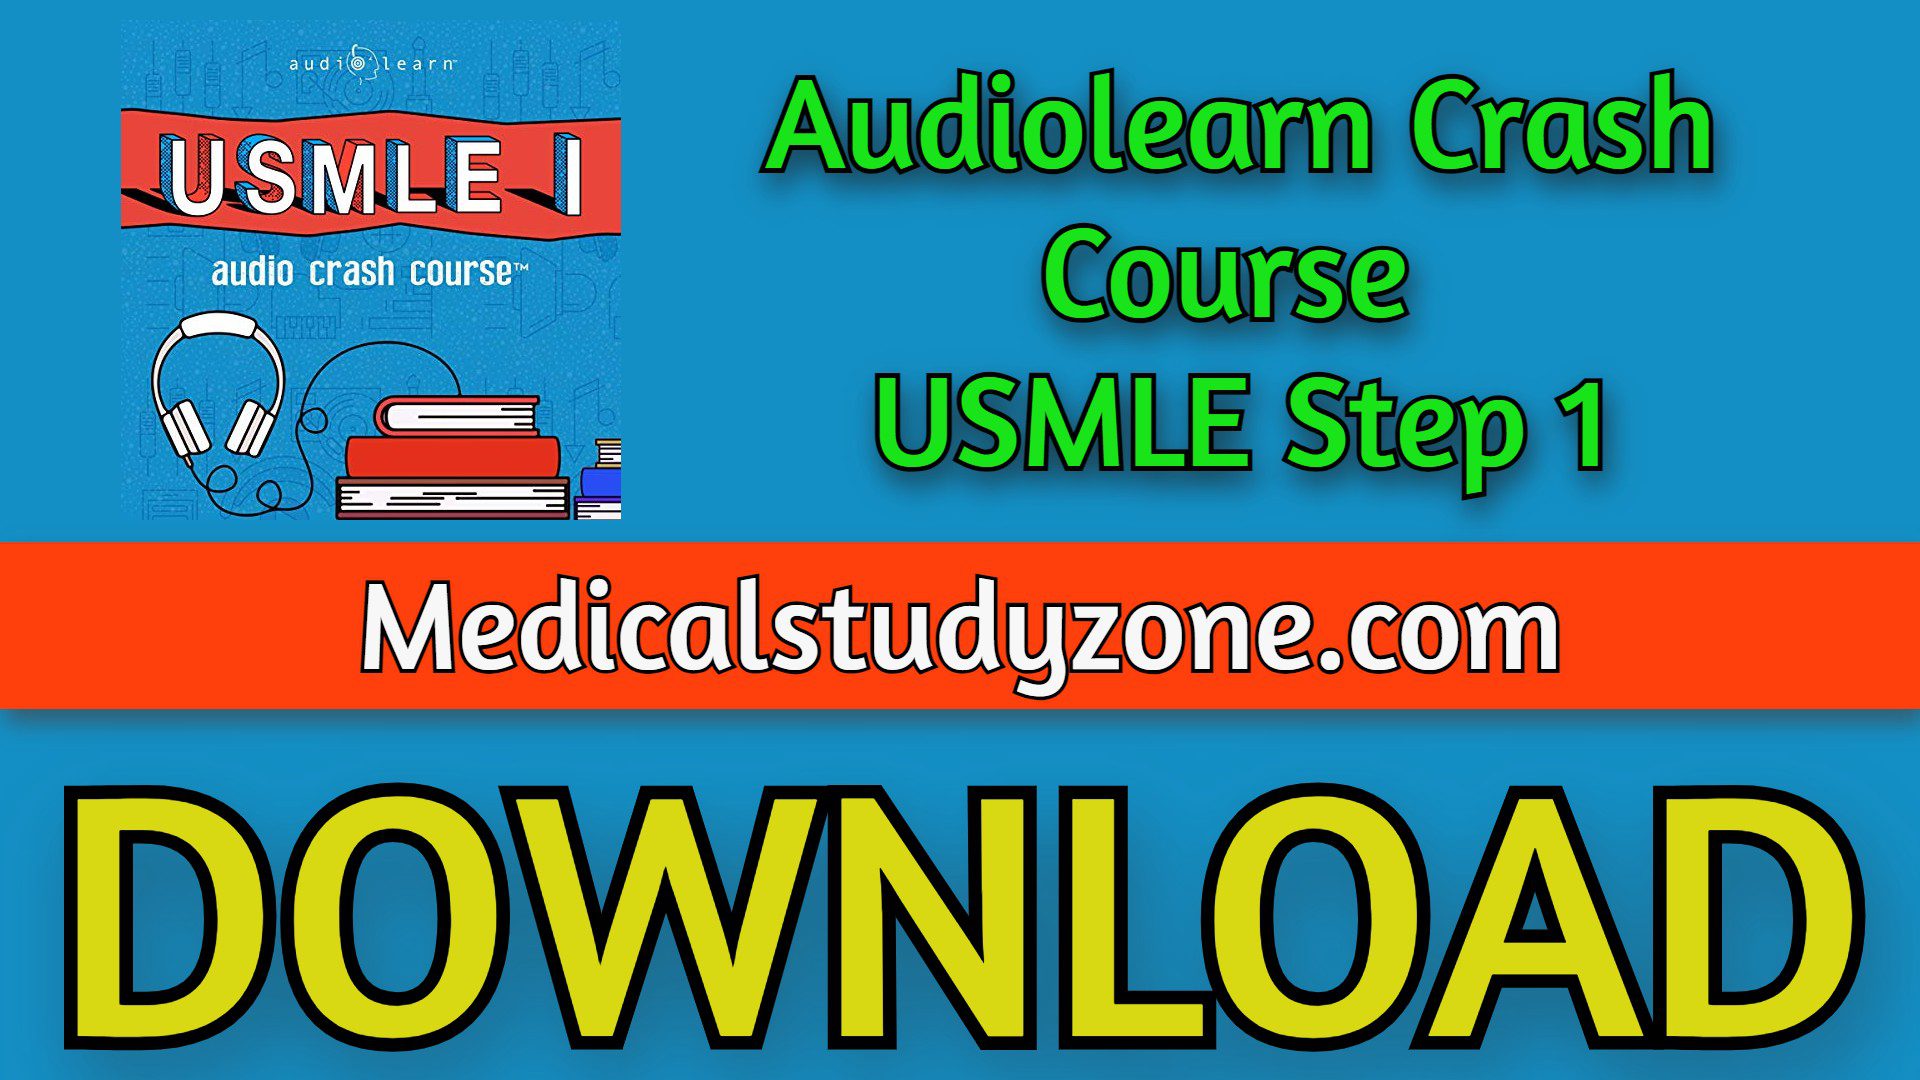 Audiolearn Crash Course USMLE Step 1 2021 Free Download